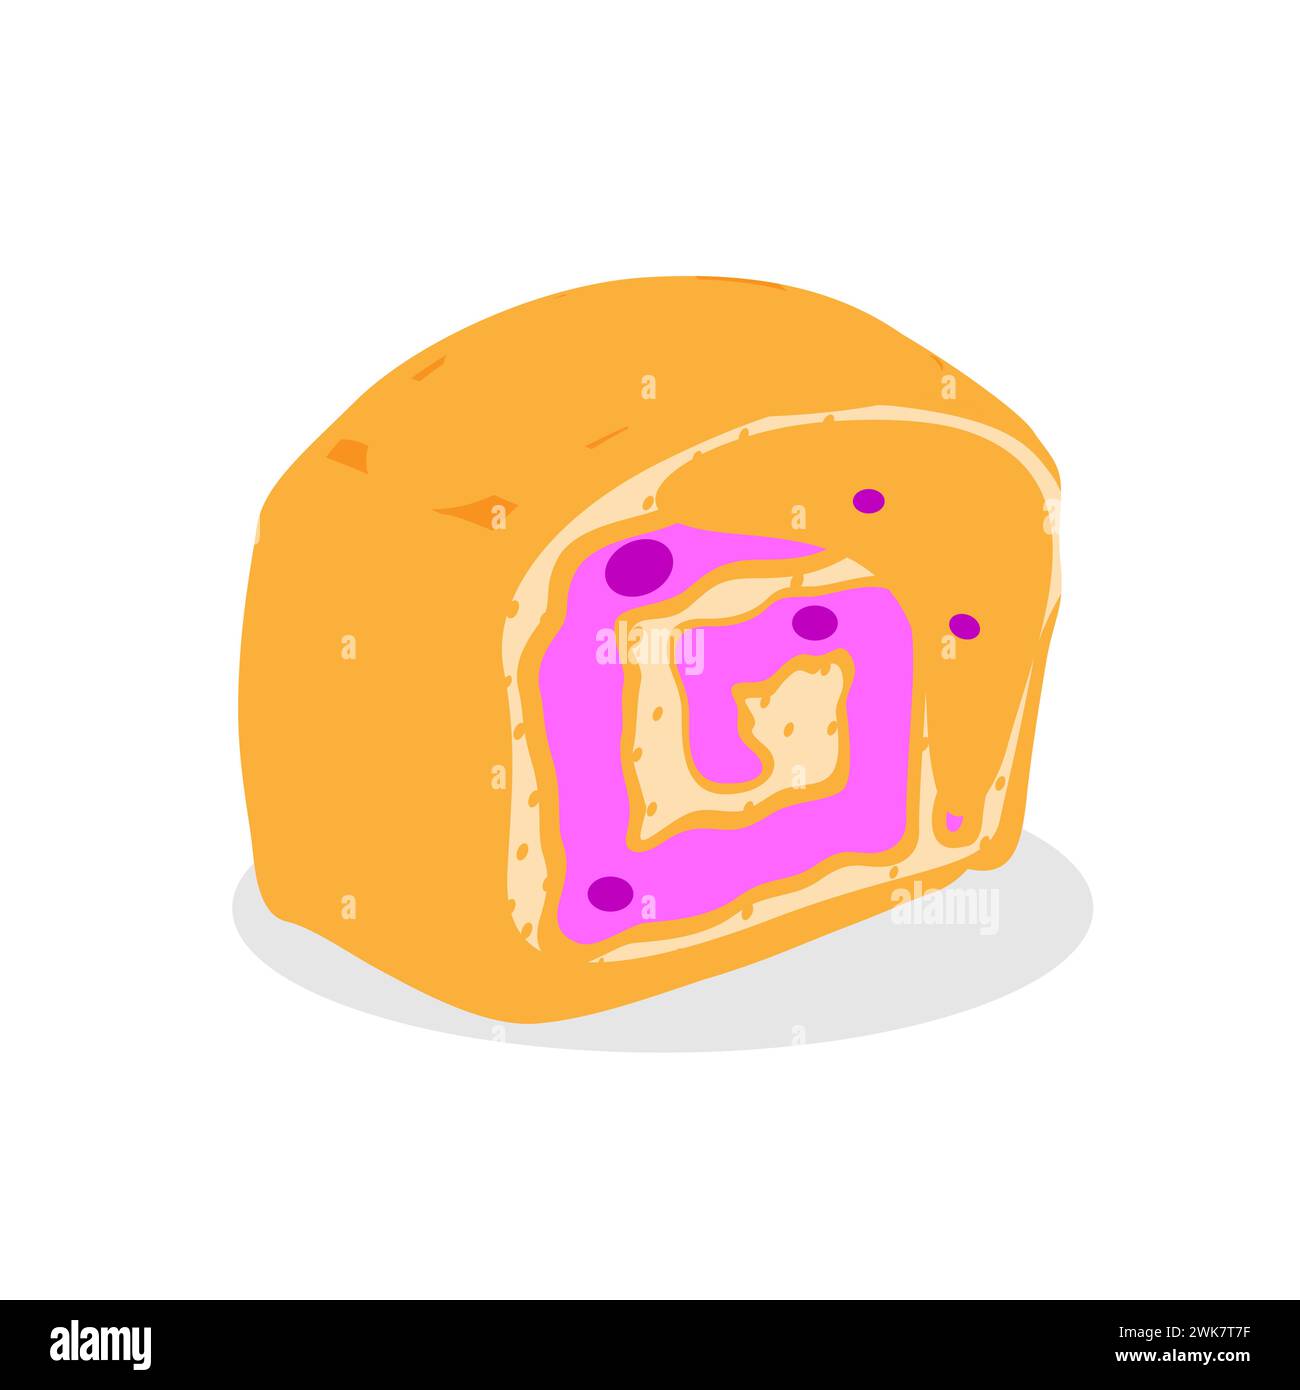 Art illustration design concept fast junk food seamless symbol logo of cake Stock Vector